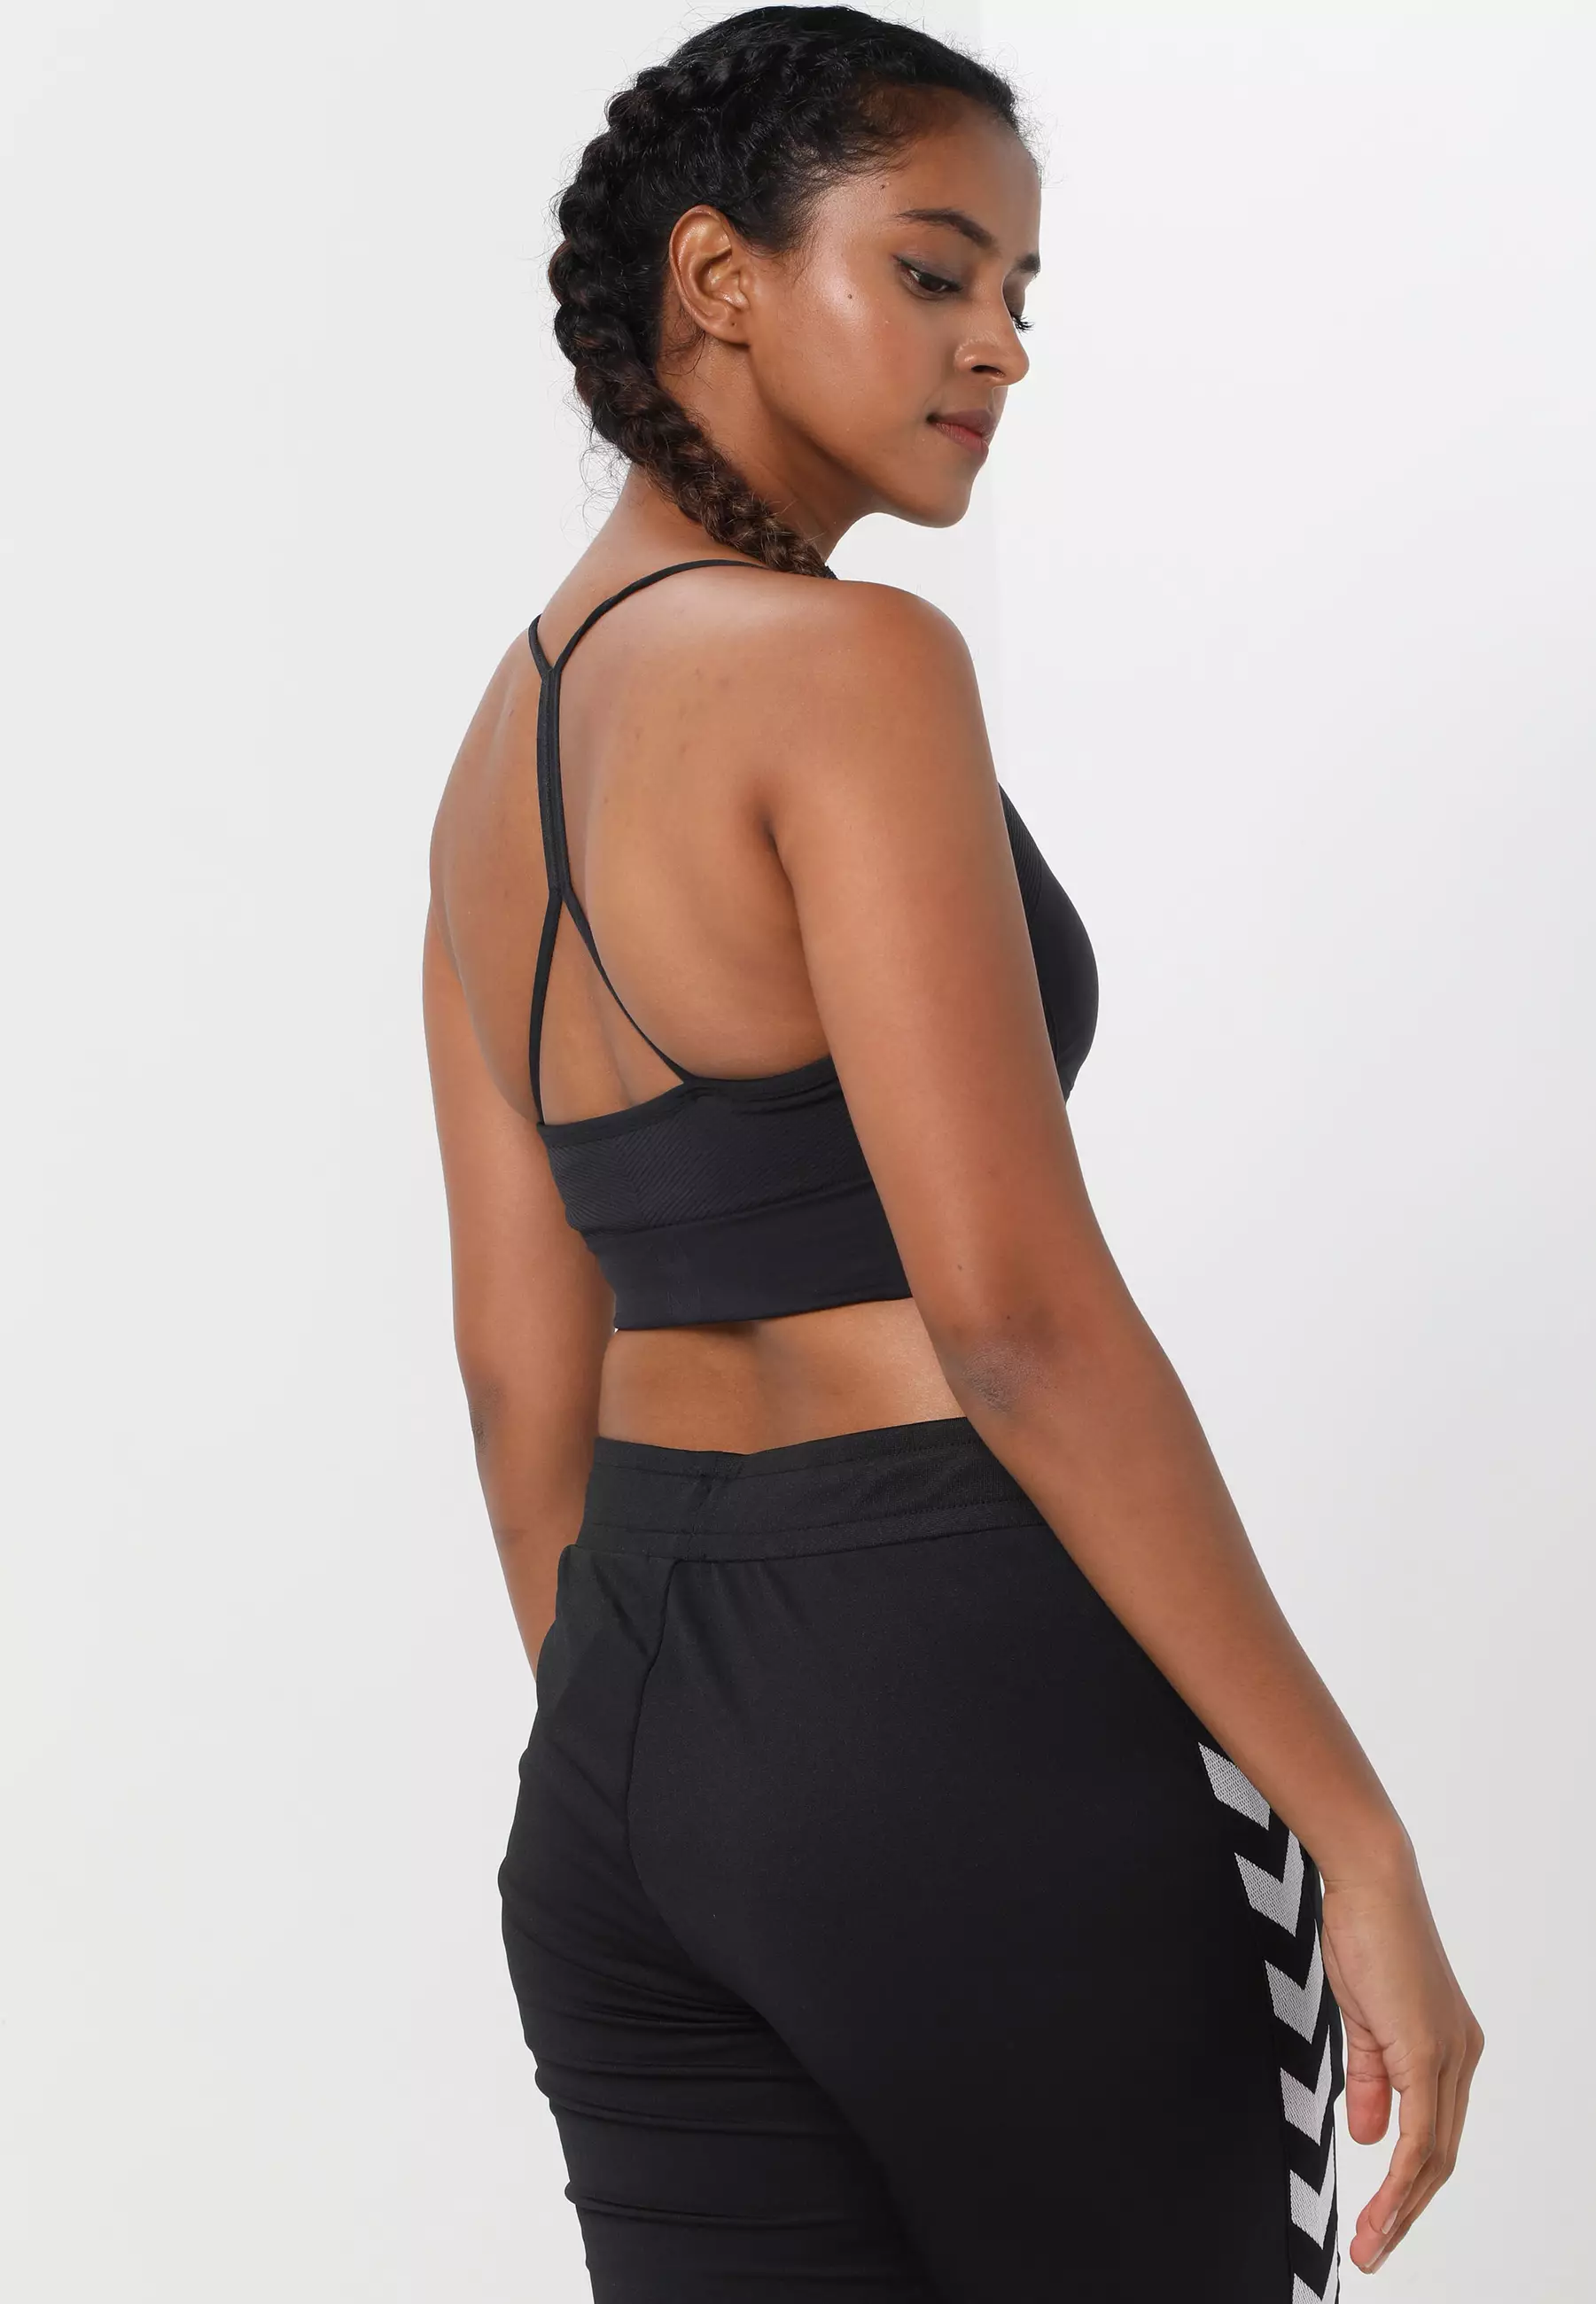 Seamless sports bra for women Hummel Tif - Hummel - Brands - Lifestyle